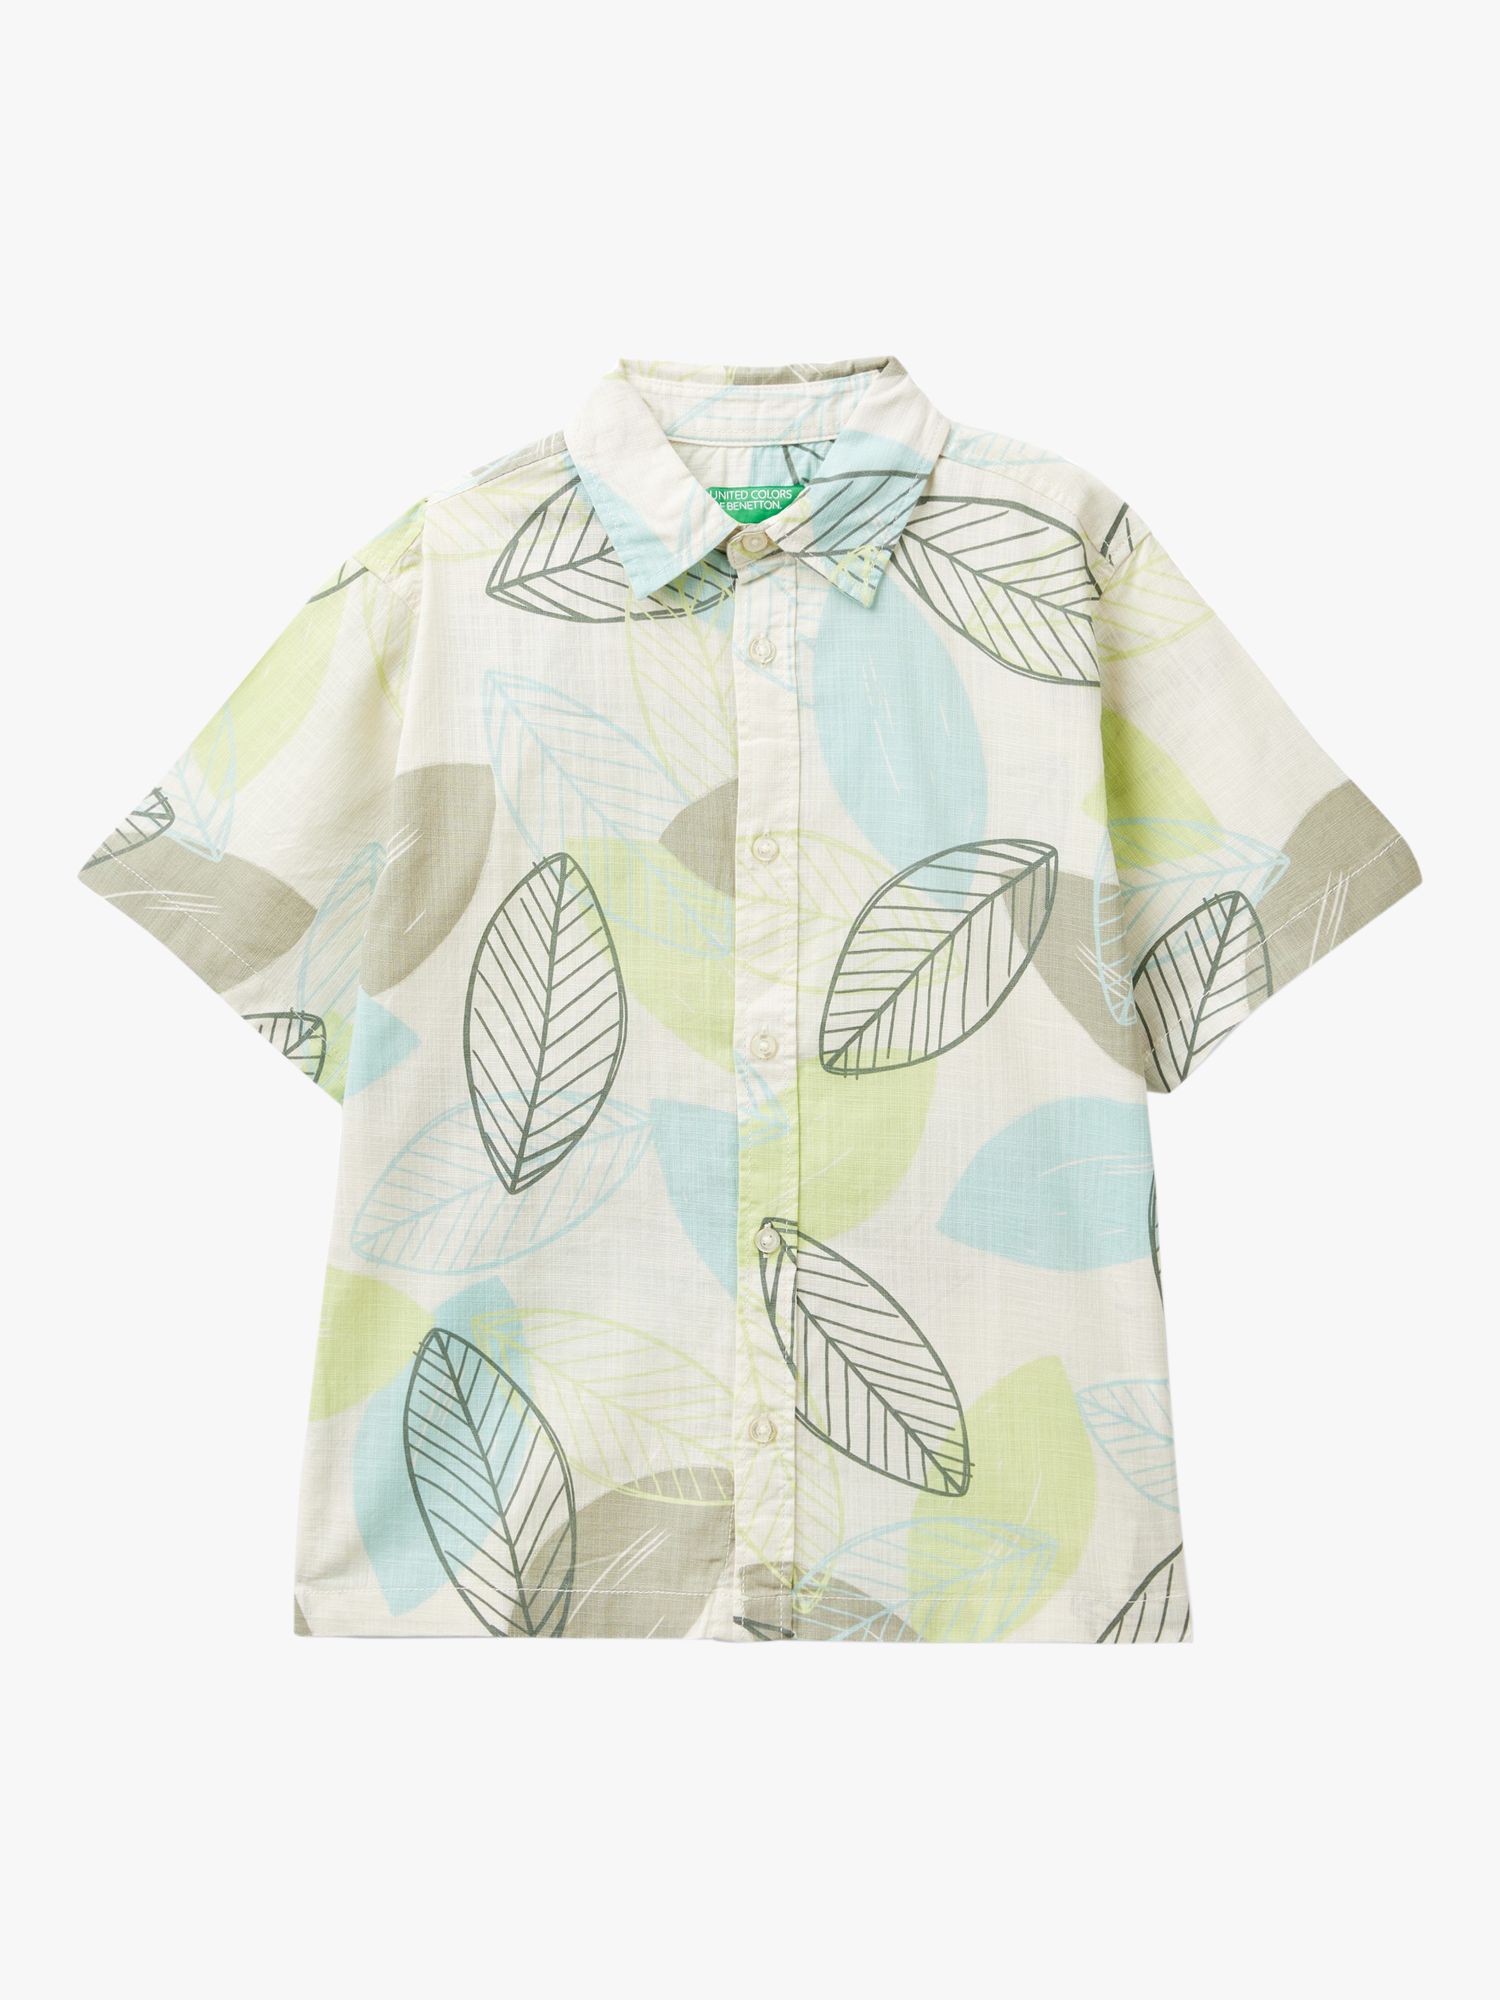 Benetton Kids' Short Sleeve Leaf Print Cotton Shirt, Multi, 6-7 years